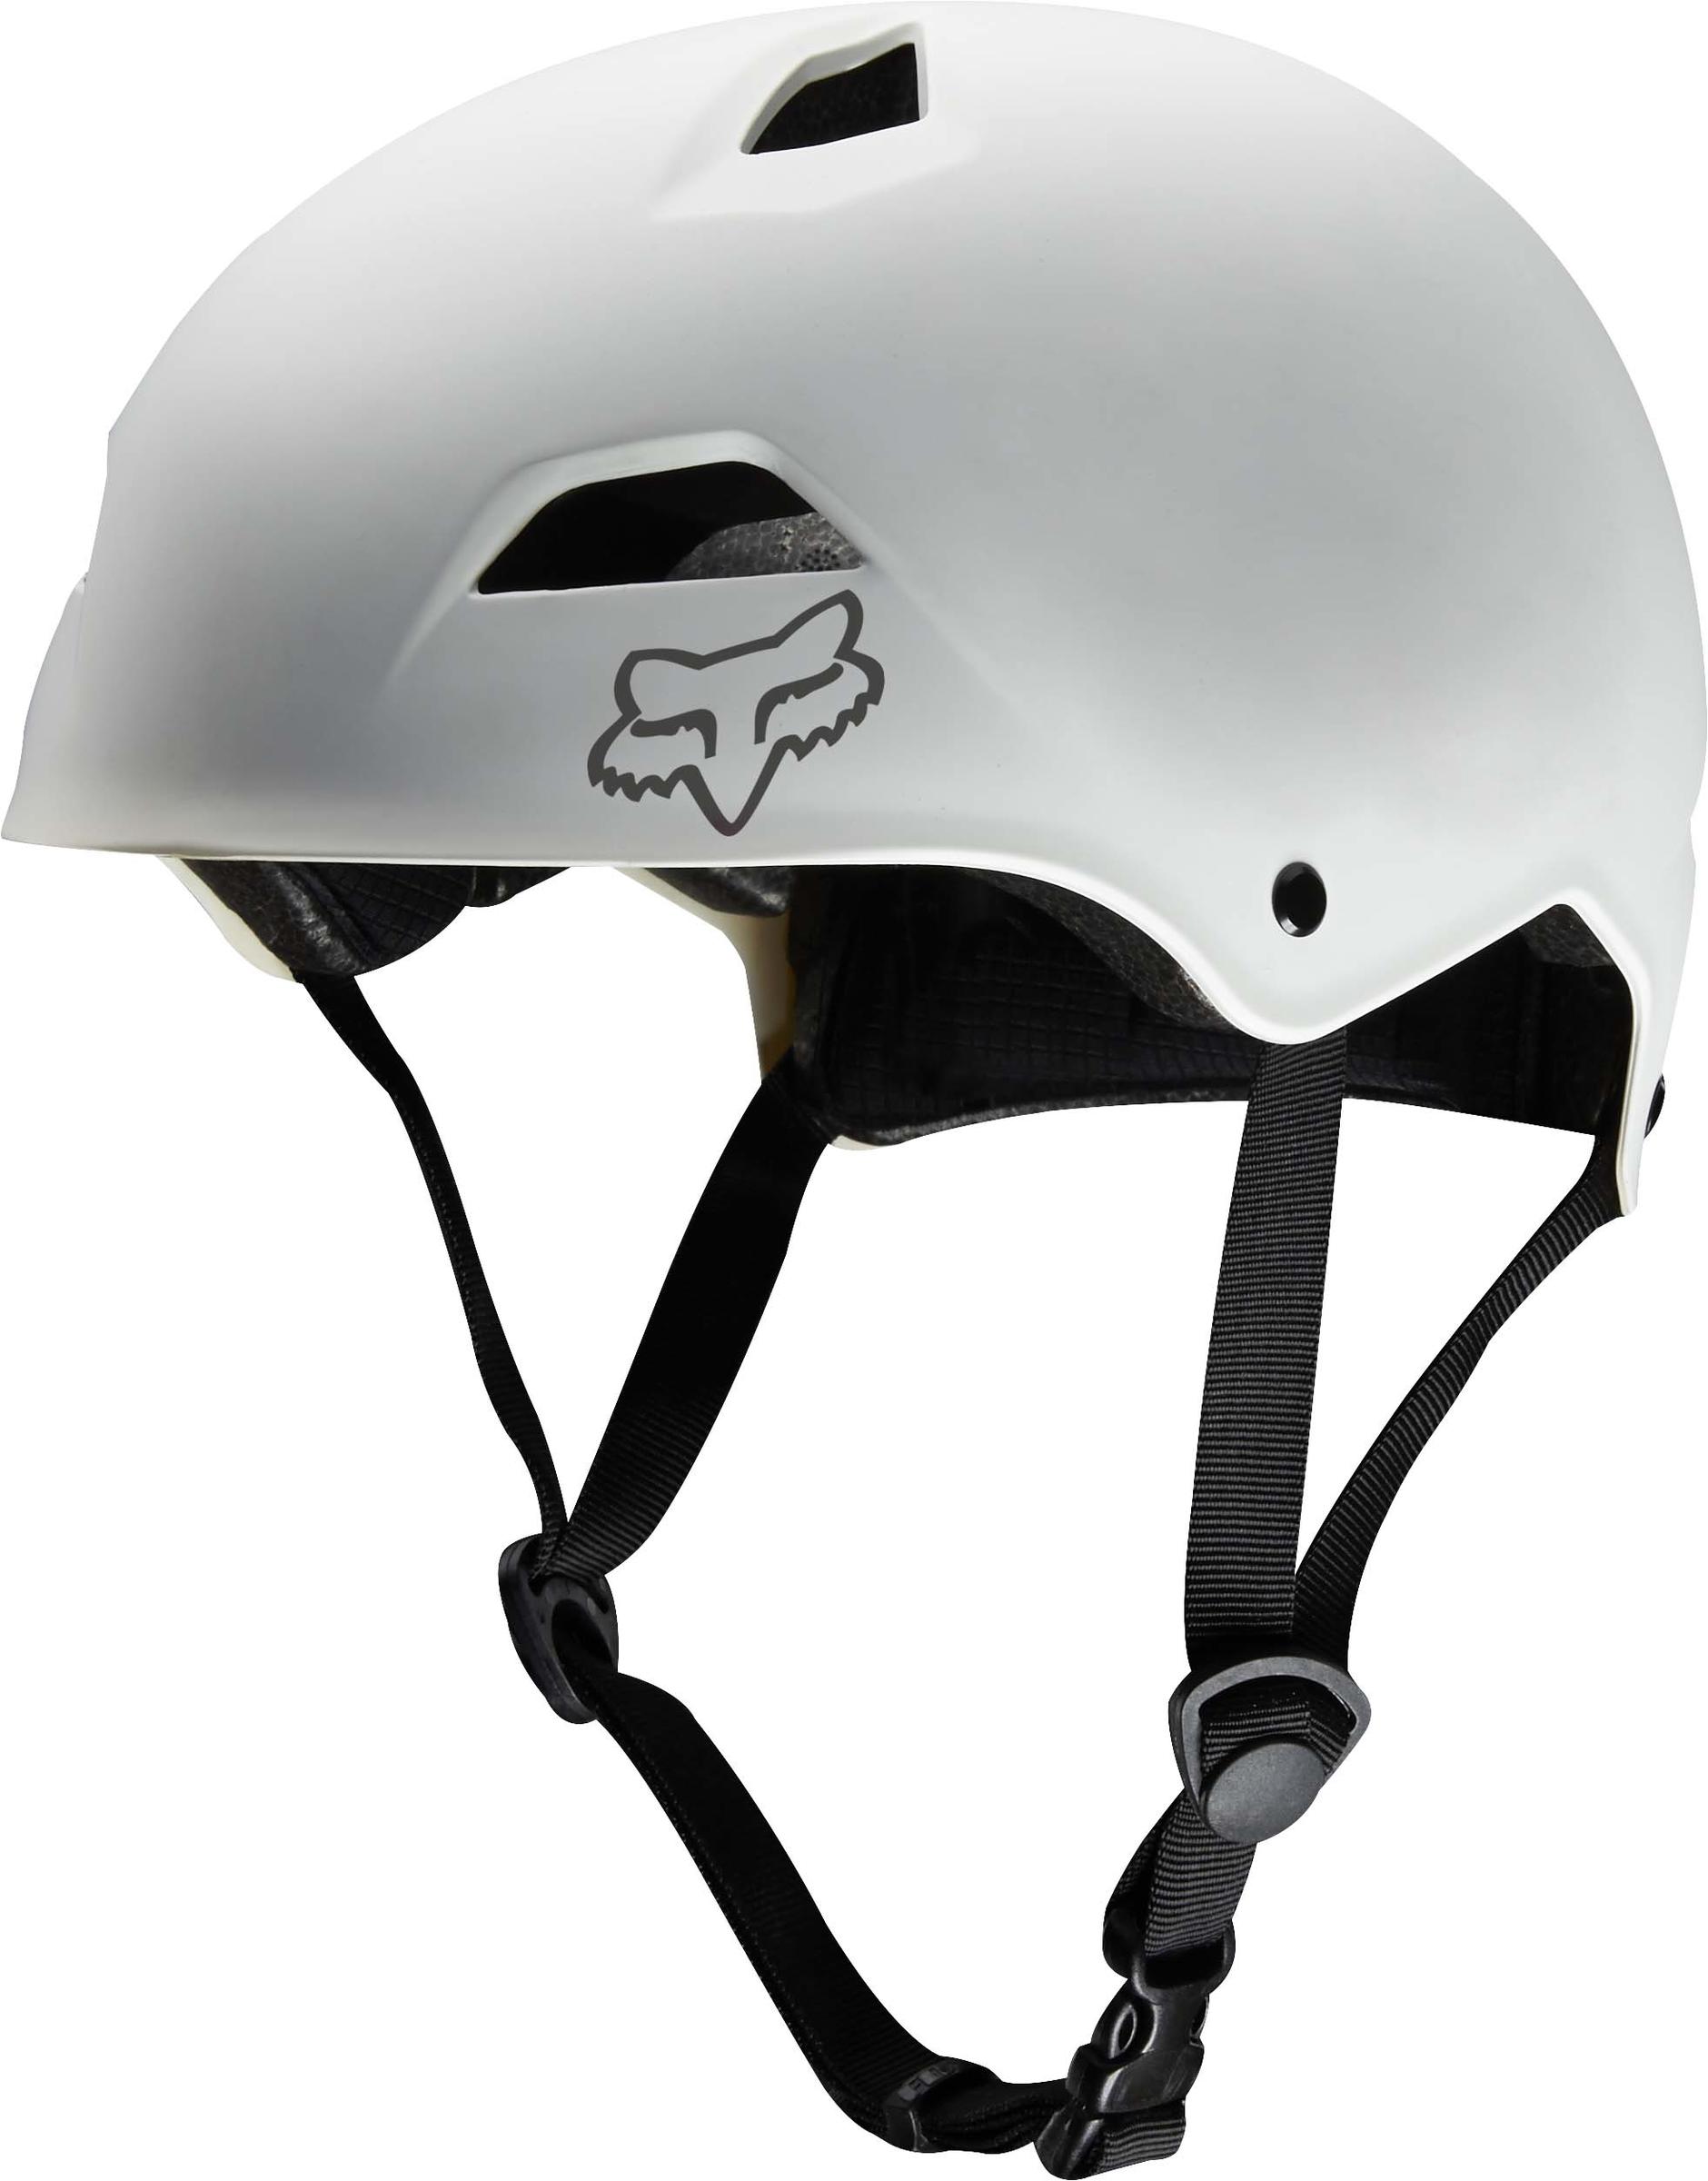 NEW in box. Medium 55-58 cm Harsh PRO EPS Cycle Skateboard BMX Helmet Black 